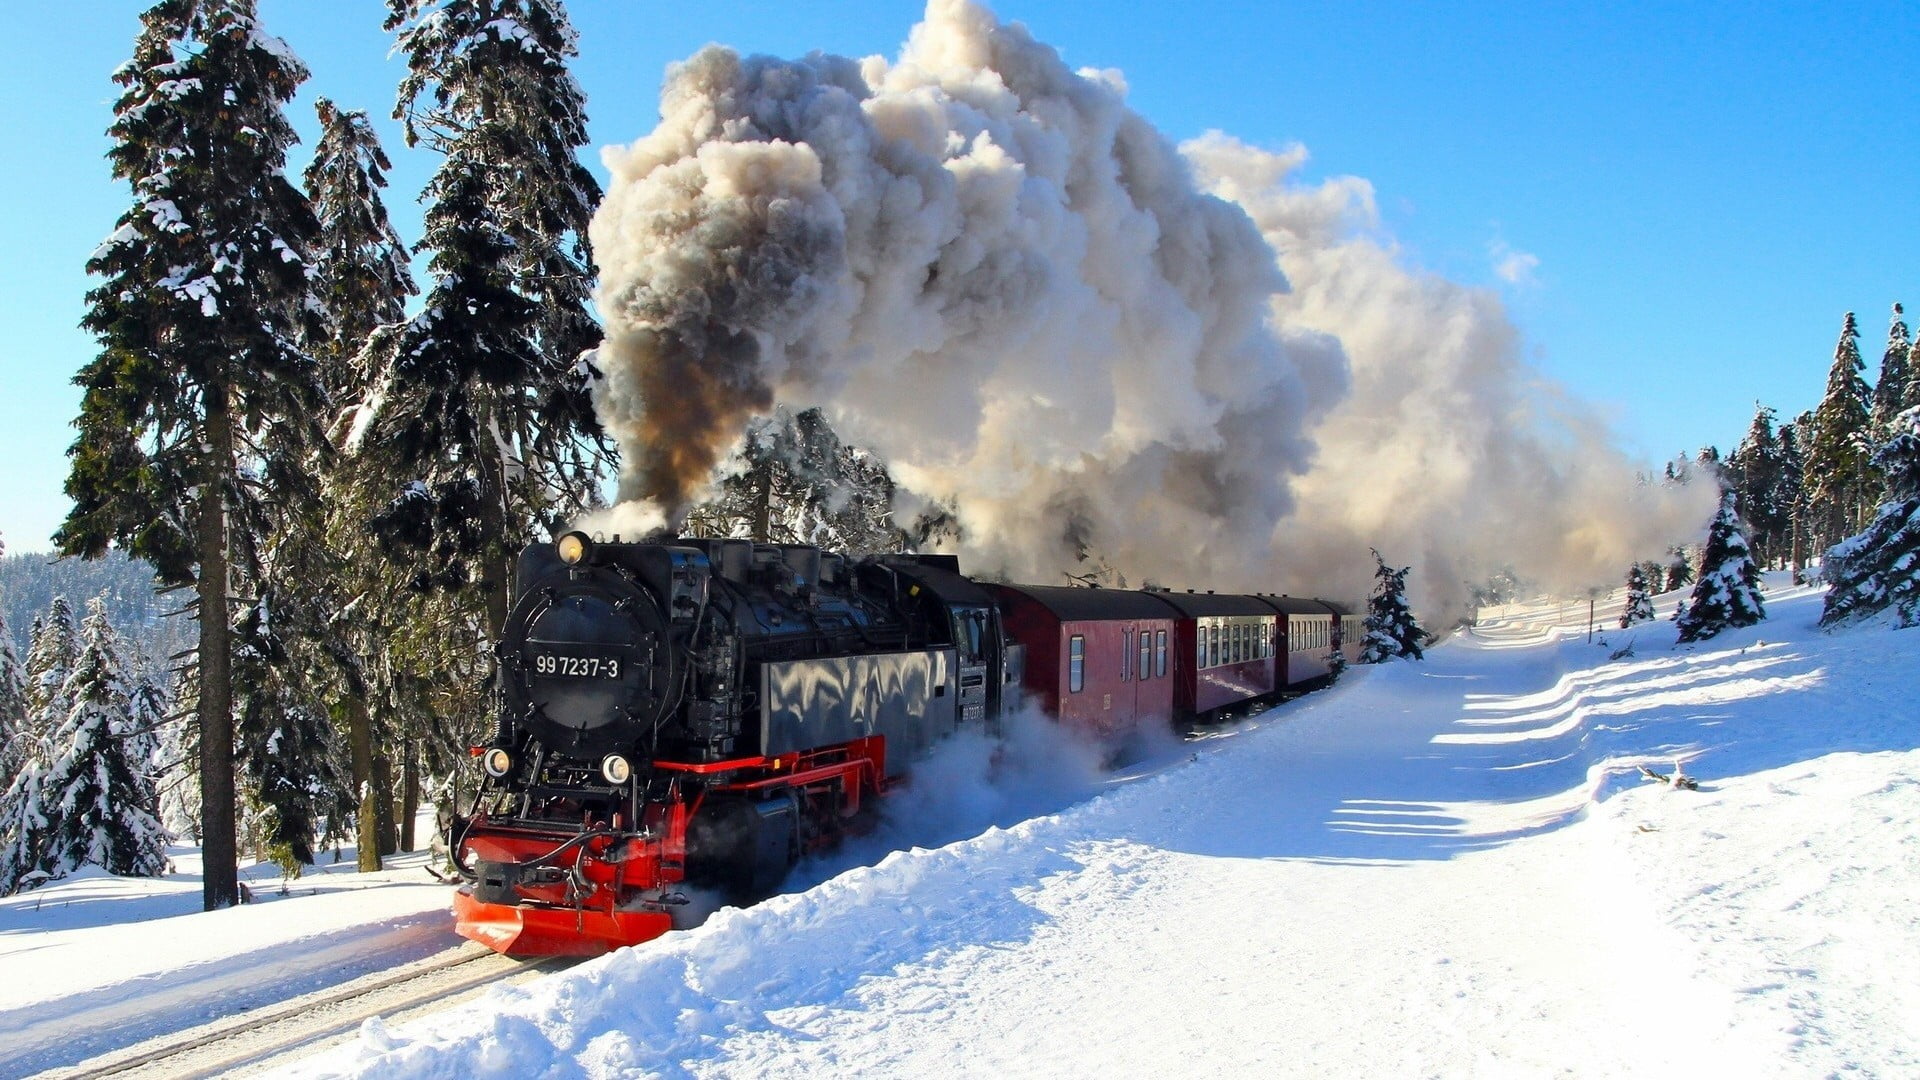 red and black train, snow, steam locomotive, vehicle, winter